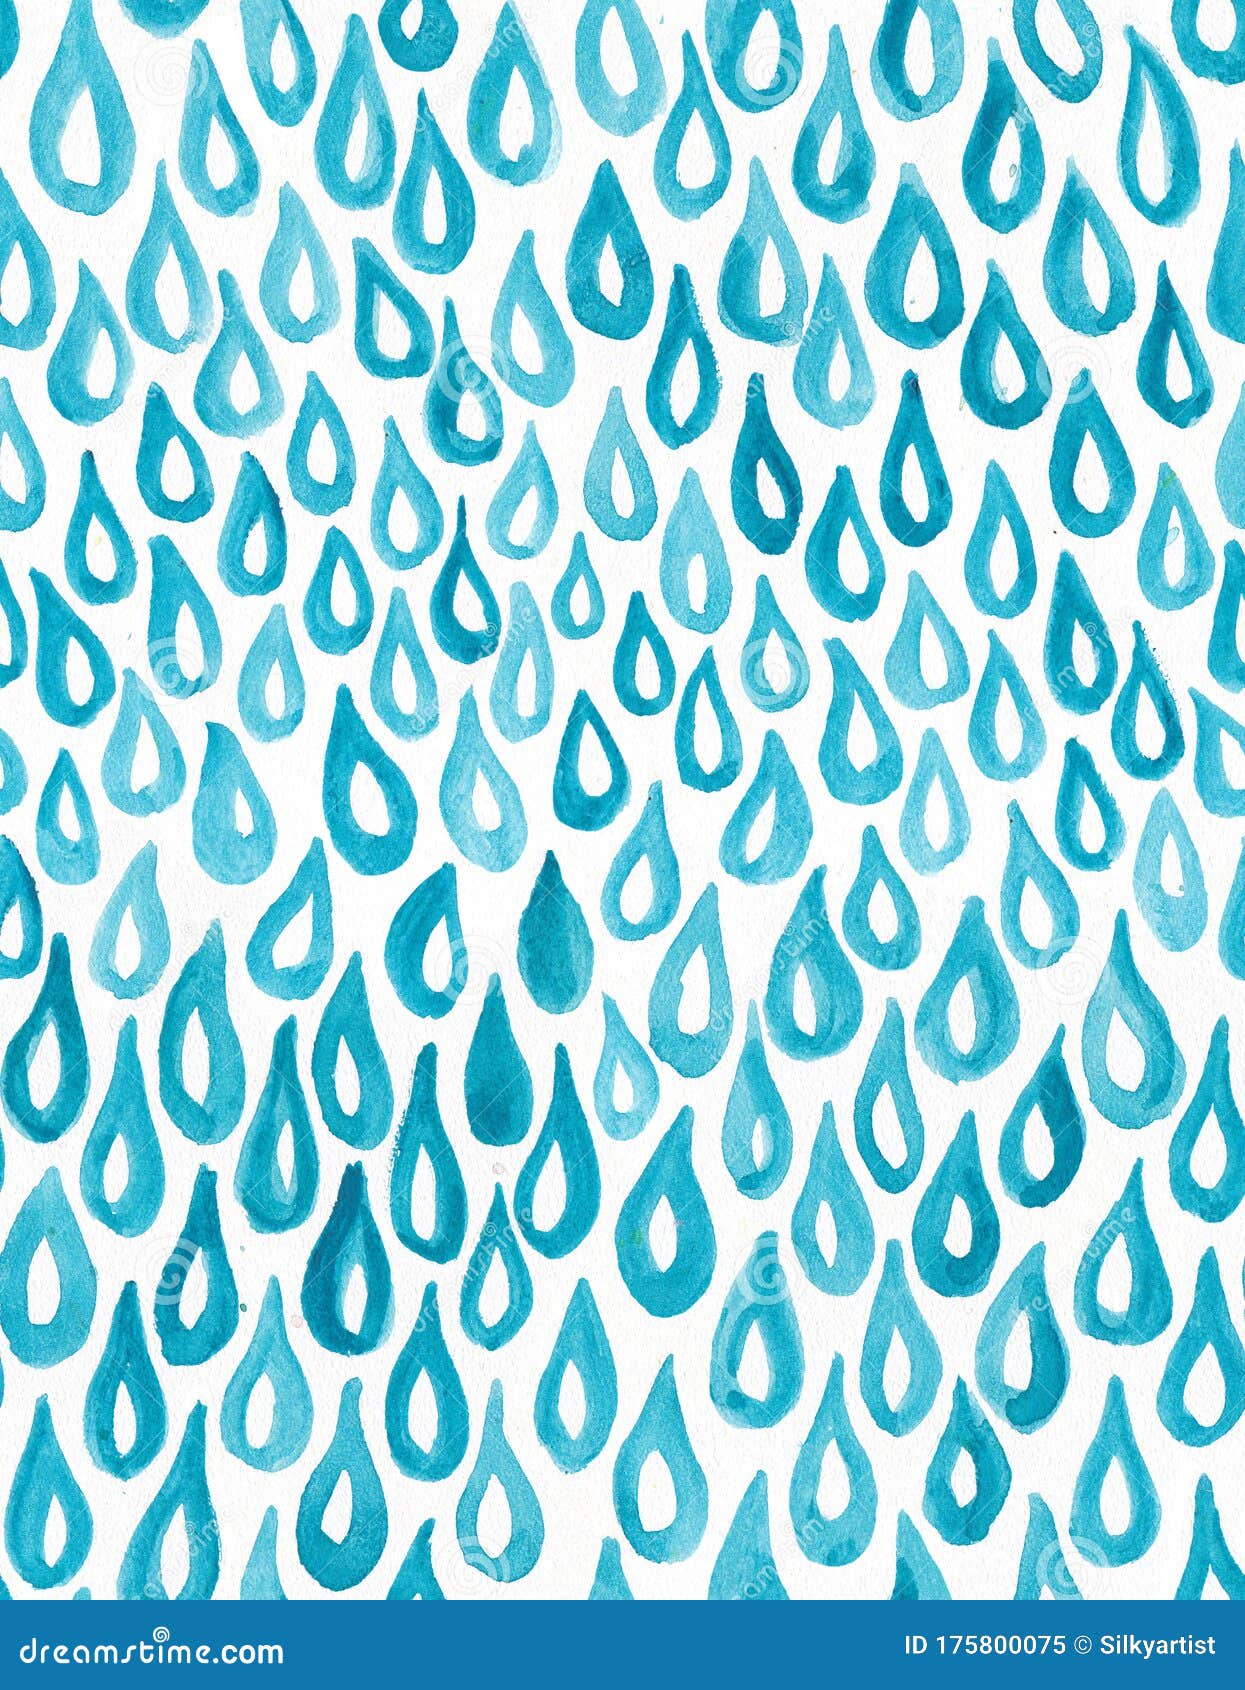 Spring Rain Drops Pattern - Light Blue Watercolor Drops on White Paper ...